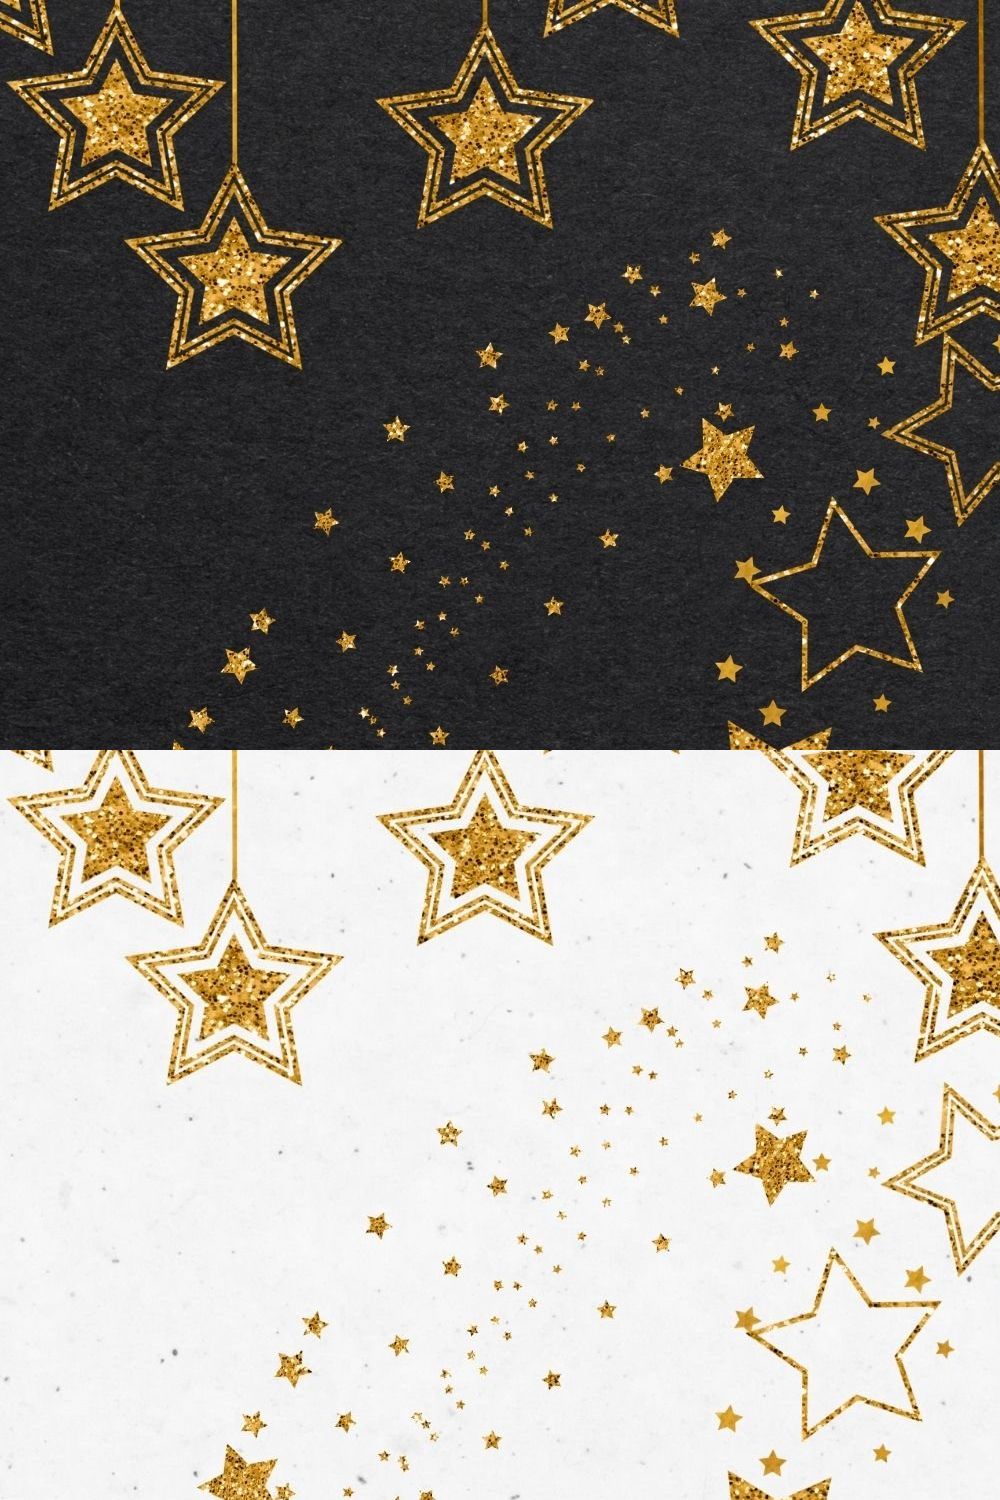 Gold Glitter Stars Clipart set pinterest preview image.